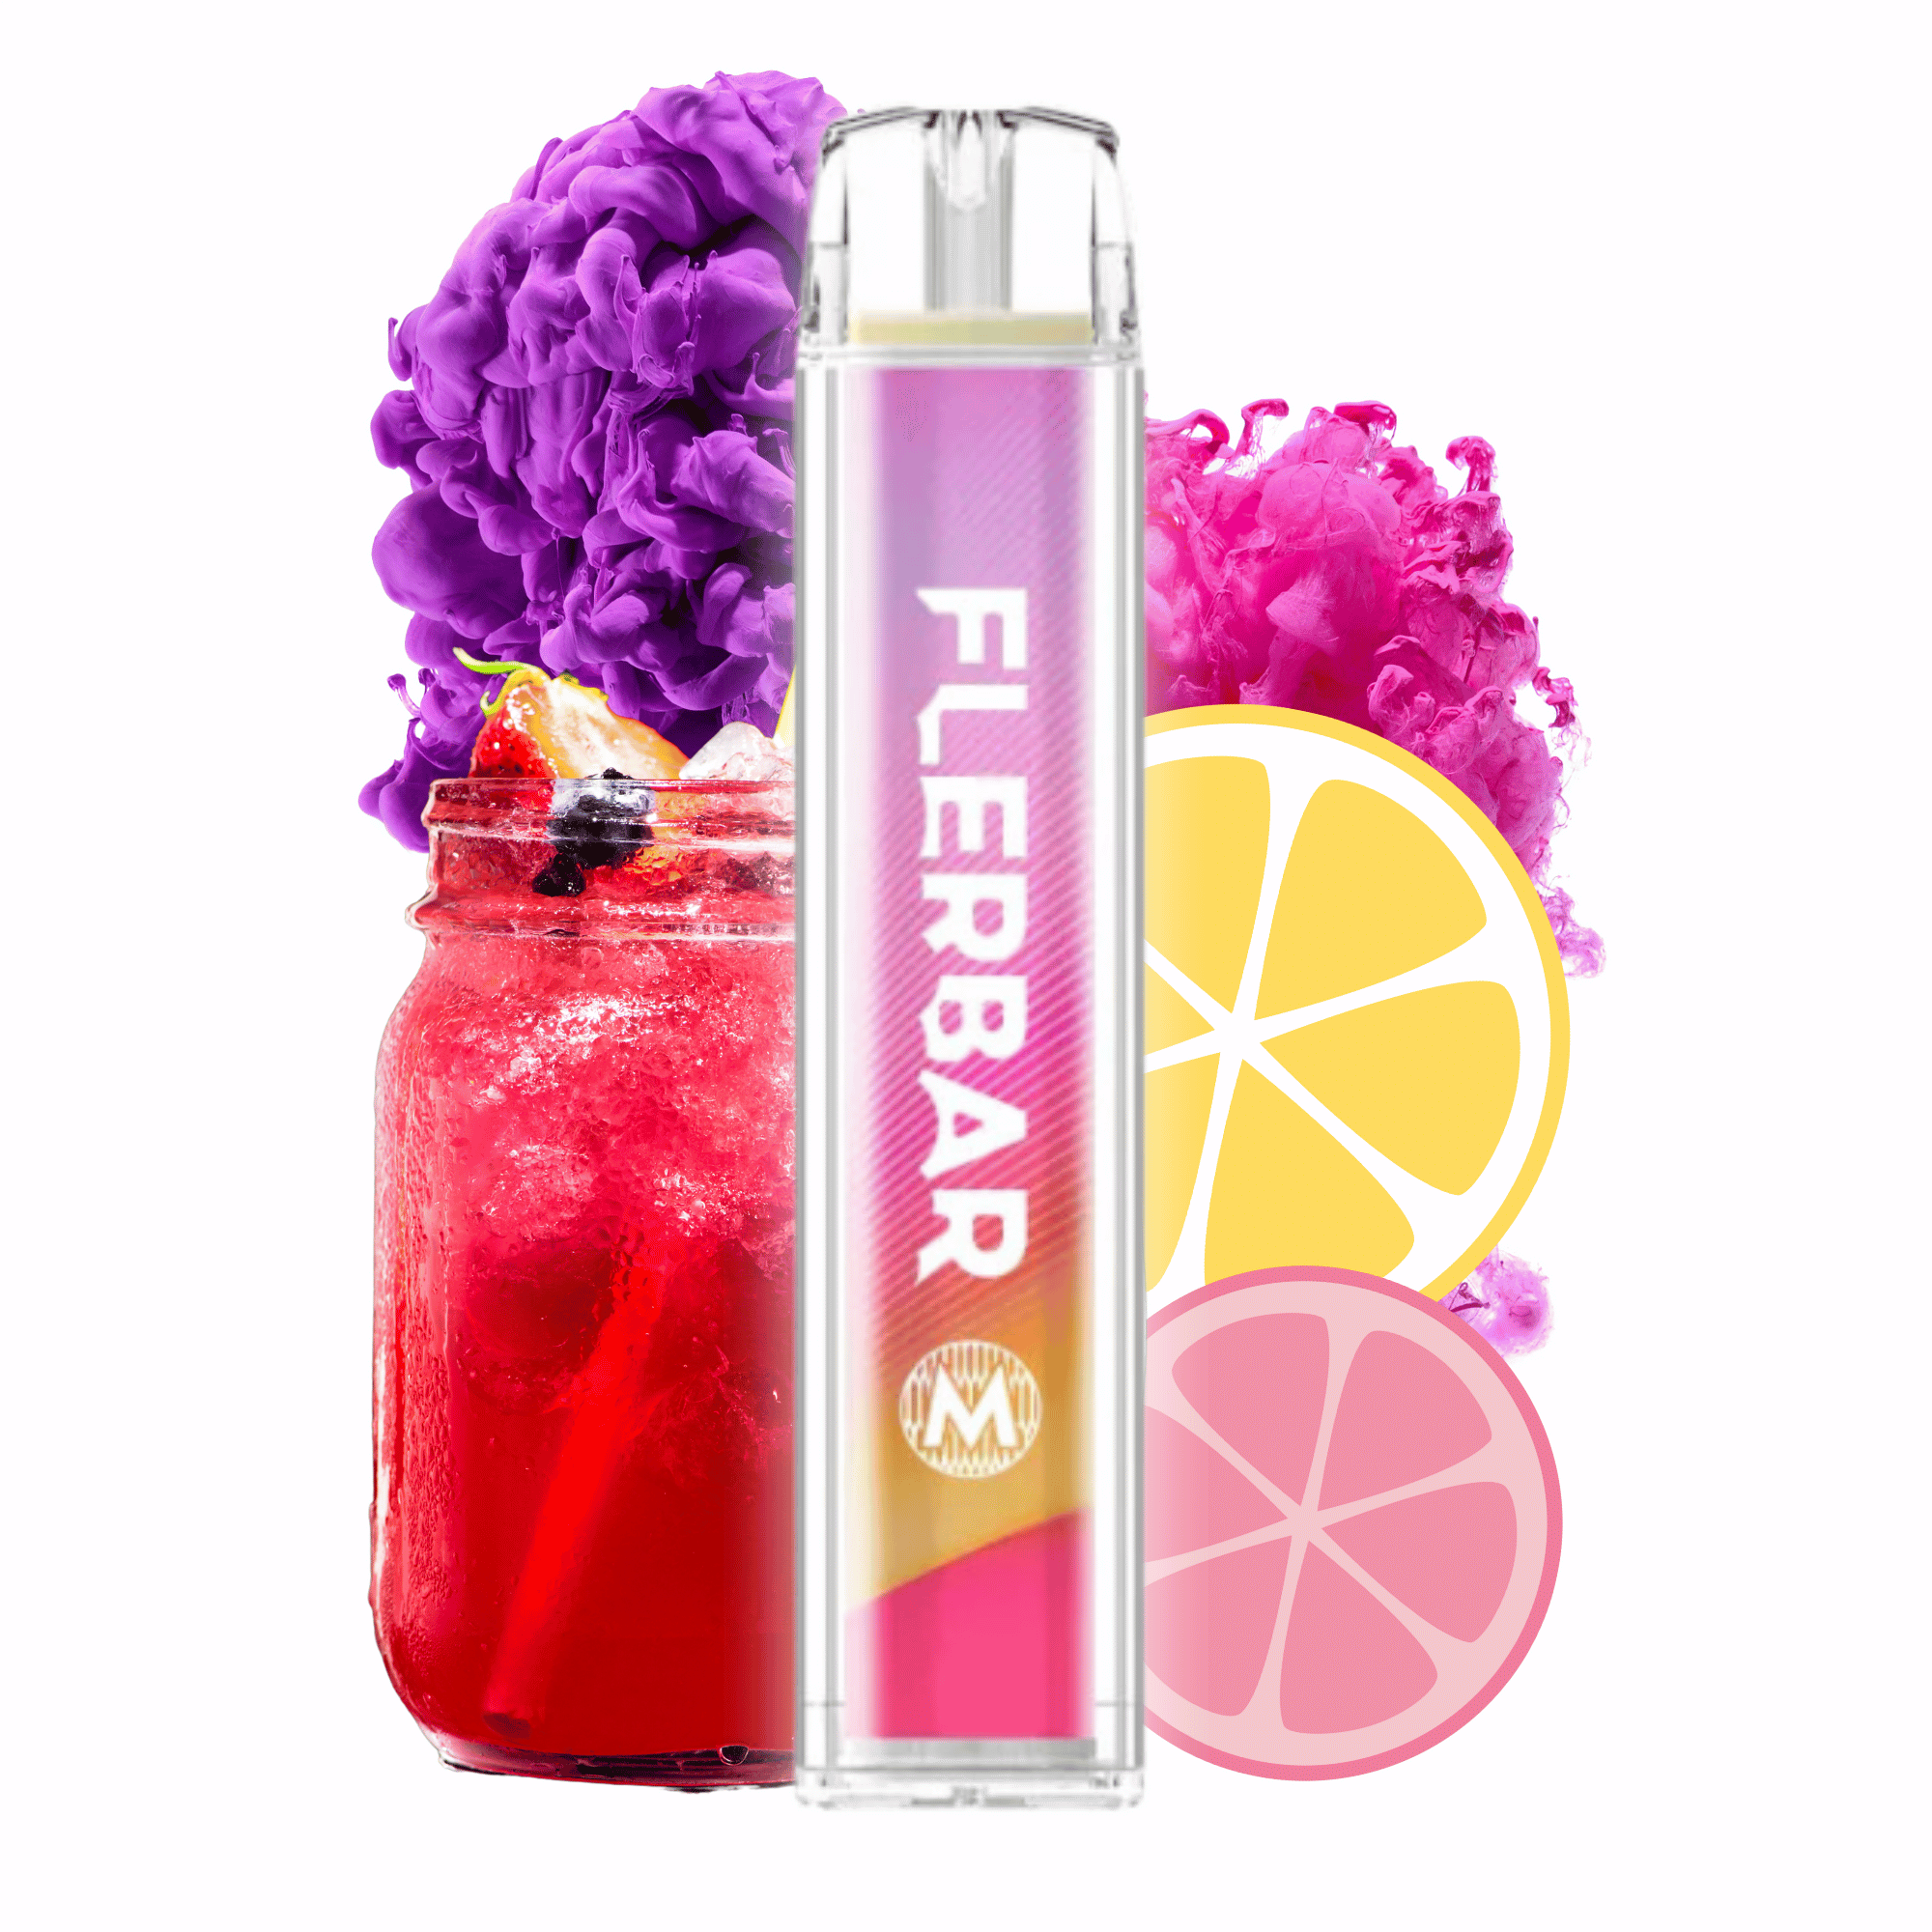 Flerbar Pink Lemonade 20mg/ml 